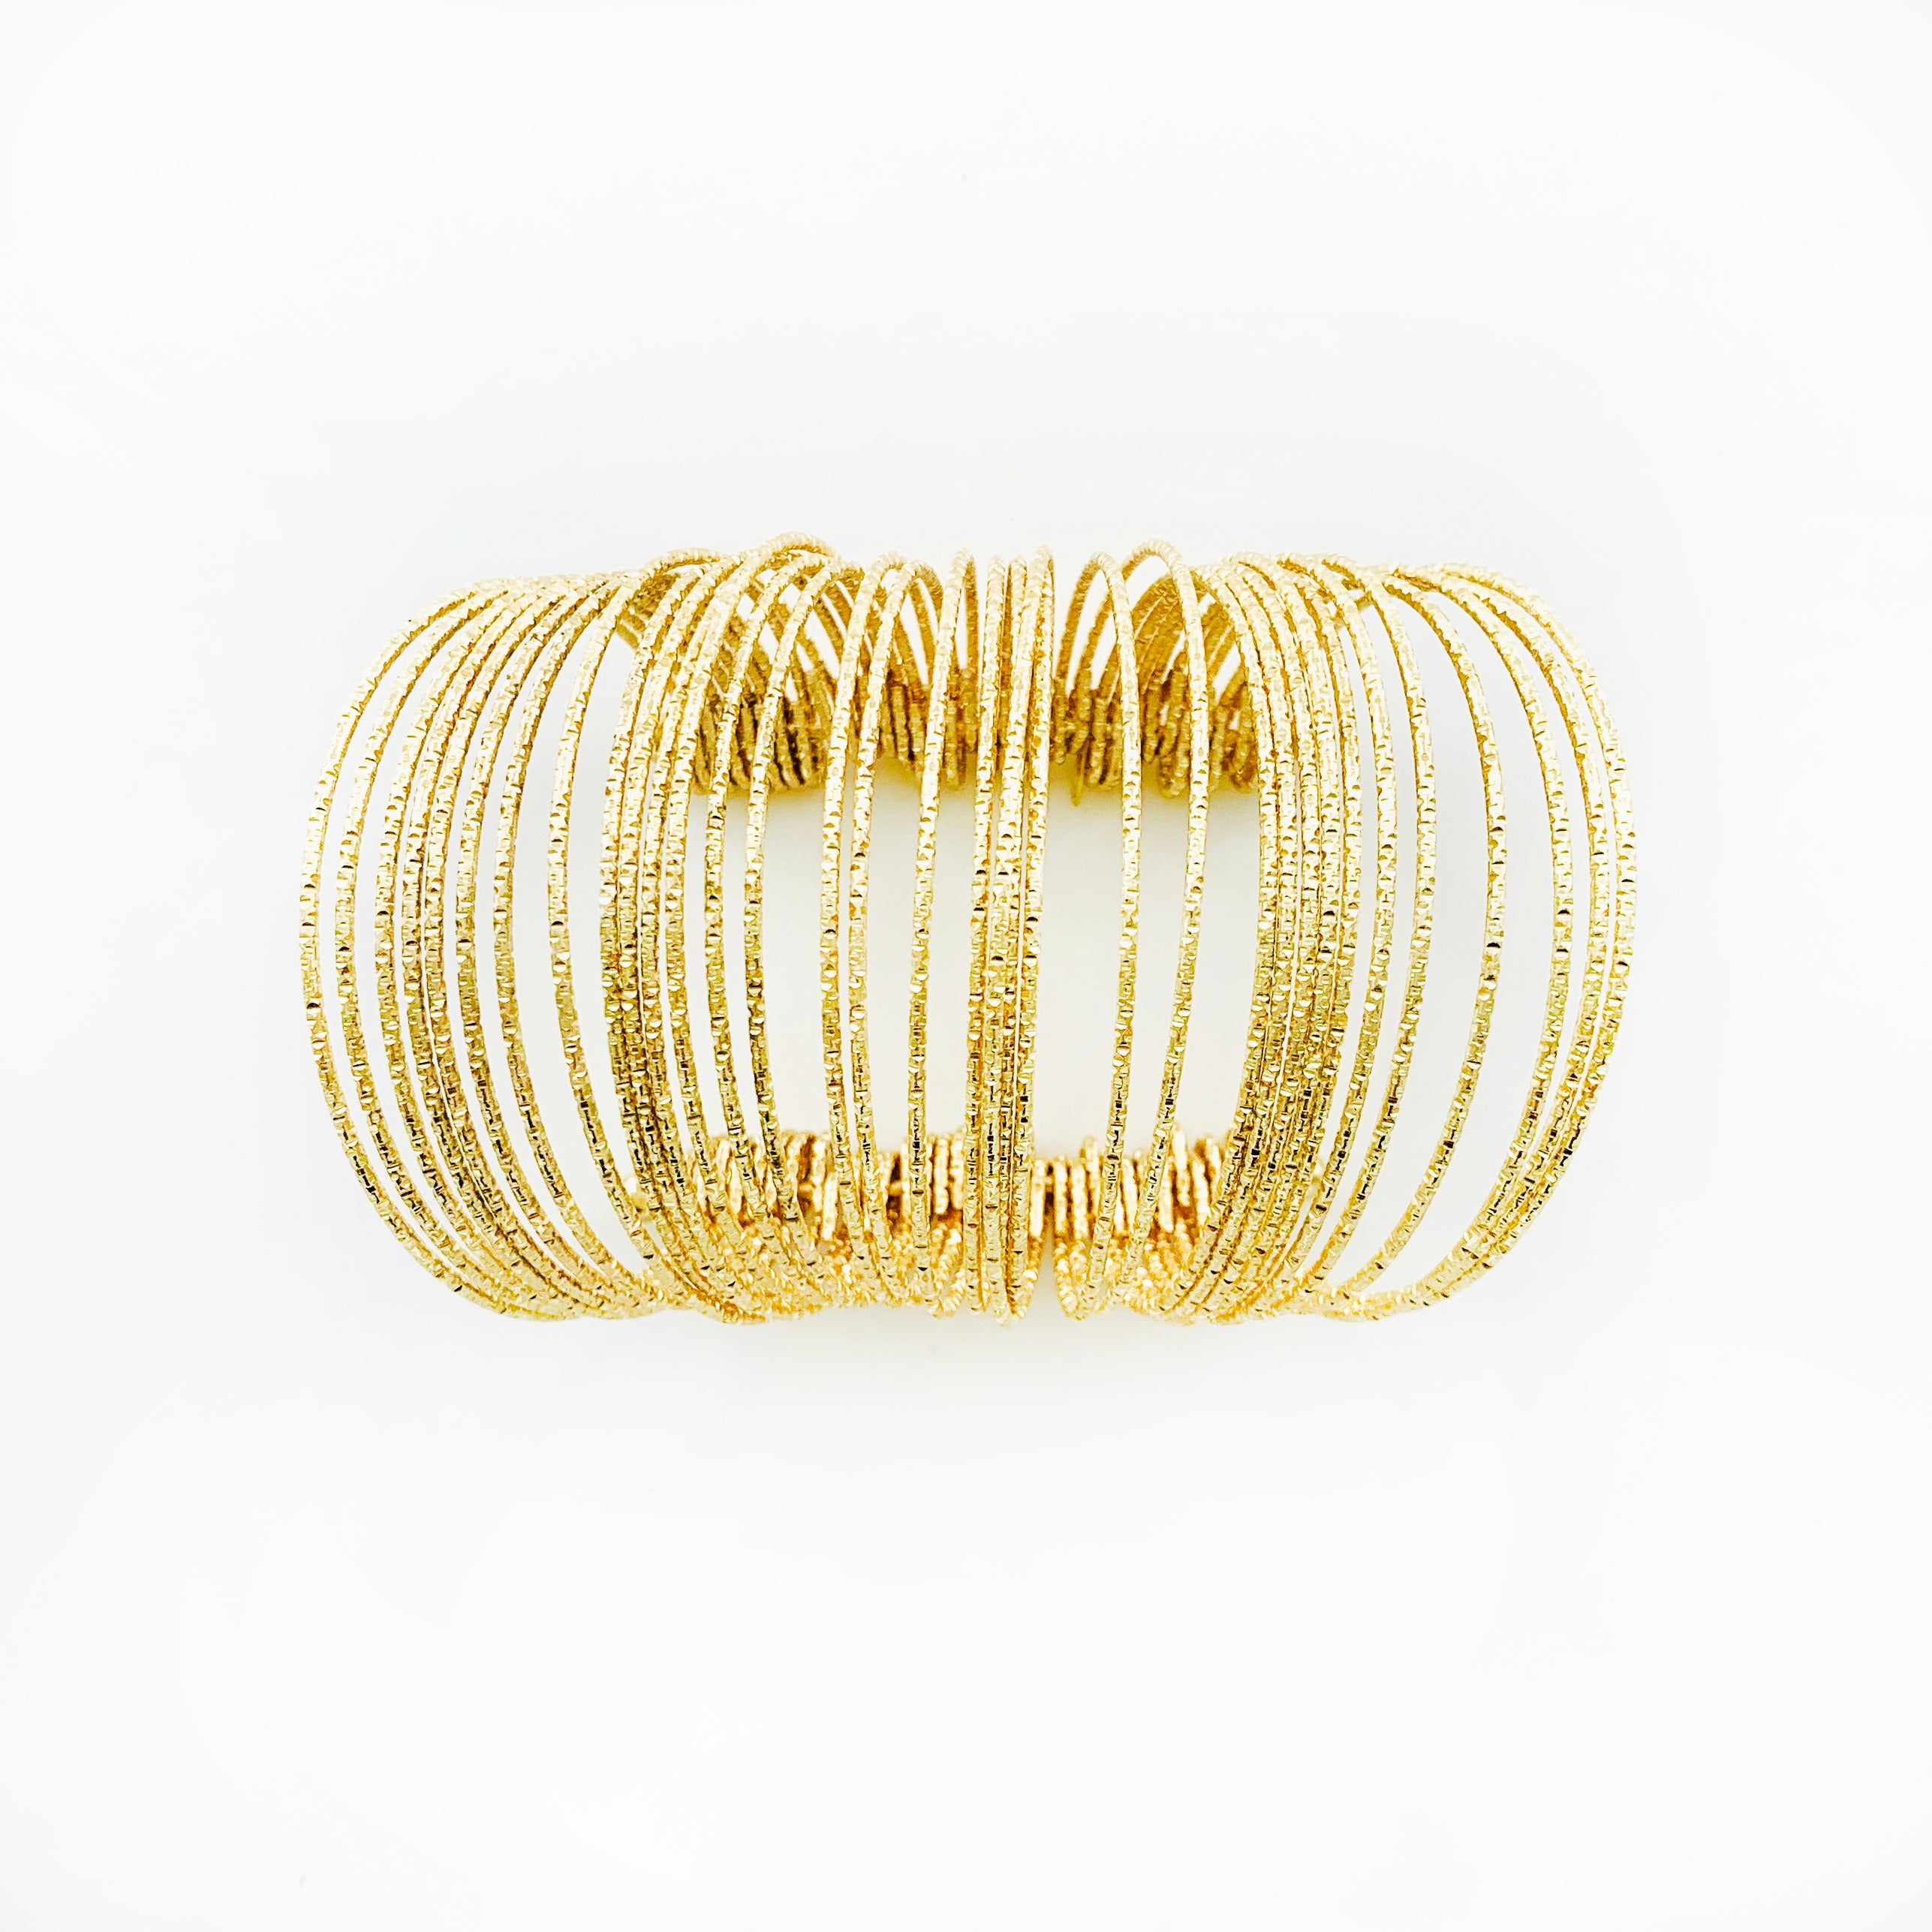 Ethnic-inspired glittery gold bangles